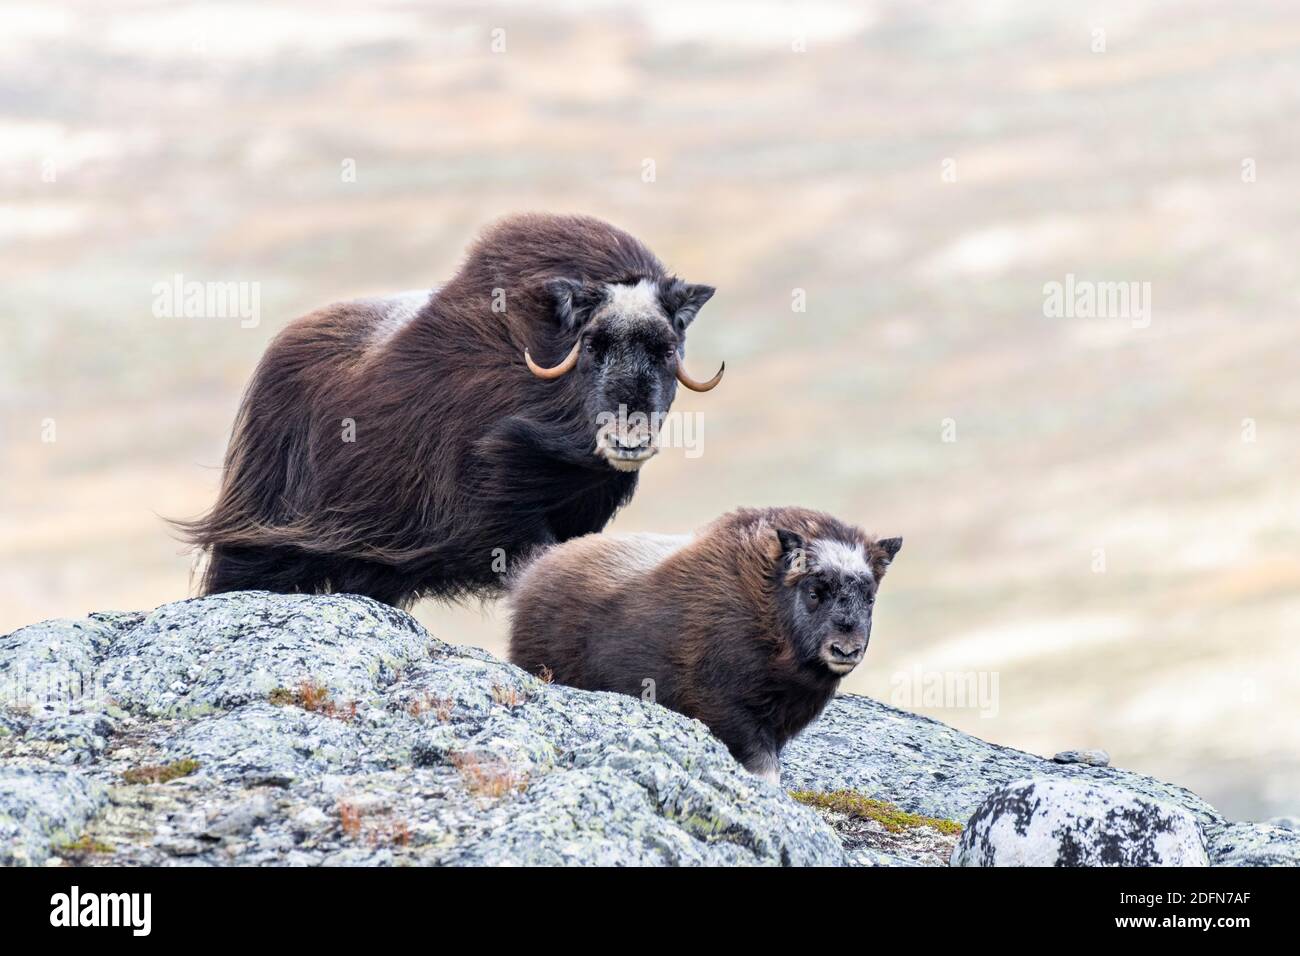 Musk ox (Ovibos moschatus), madre con joven, Parque Nacional de Dovrefjell-Sunndalsfjella, Noruega Foto de stock